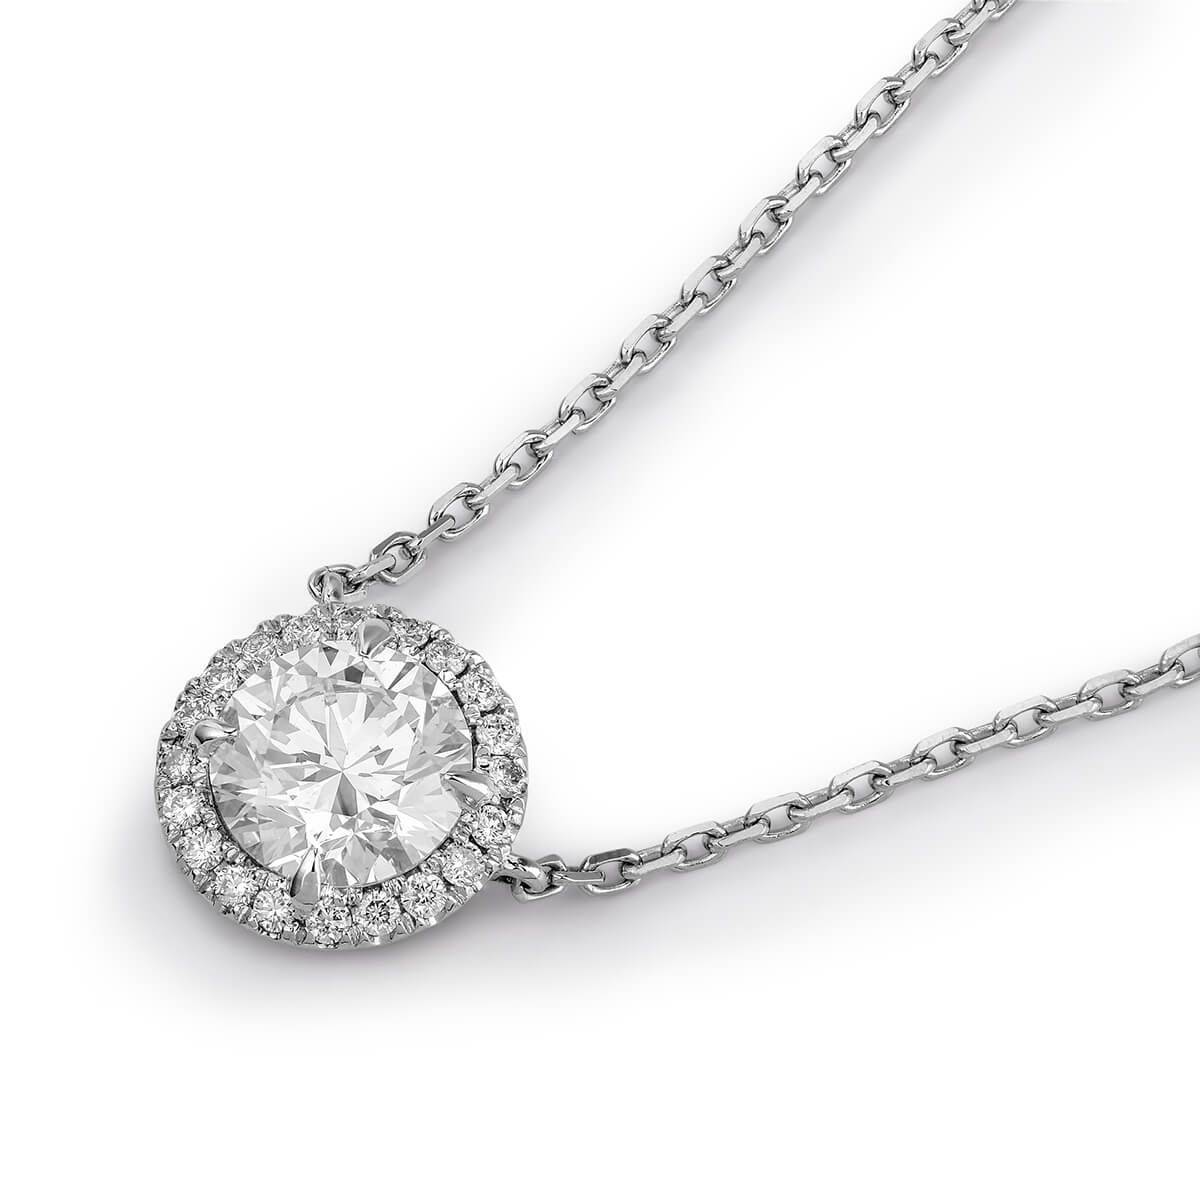  White Diamond Necklace, 1.69 Ct. TW, Round shape, GIA Certified, 6272454944